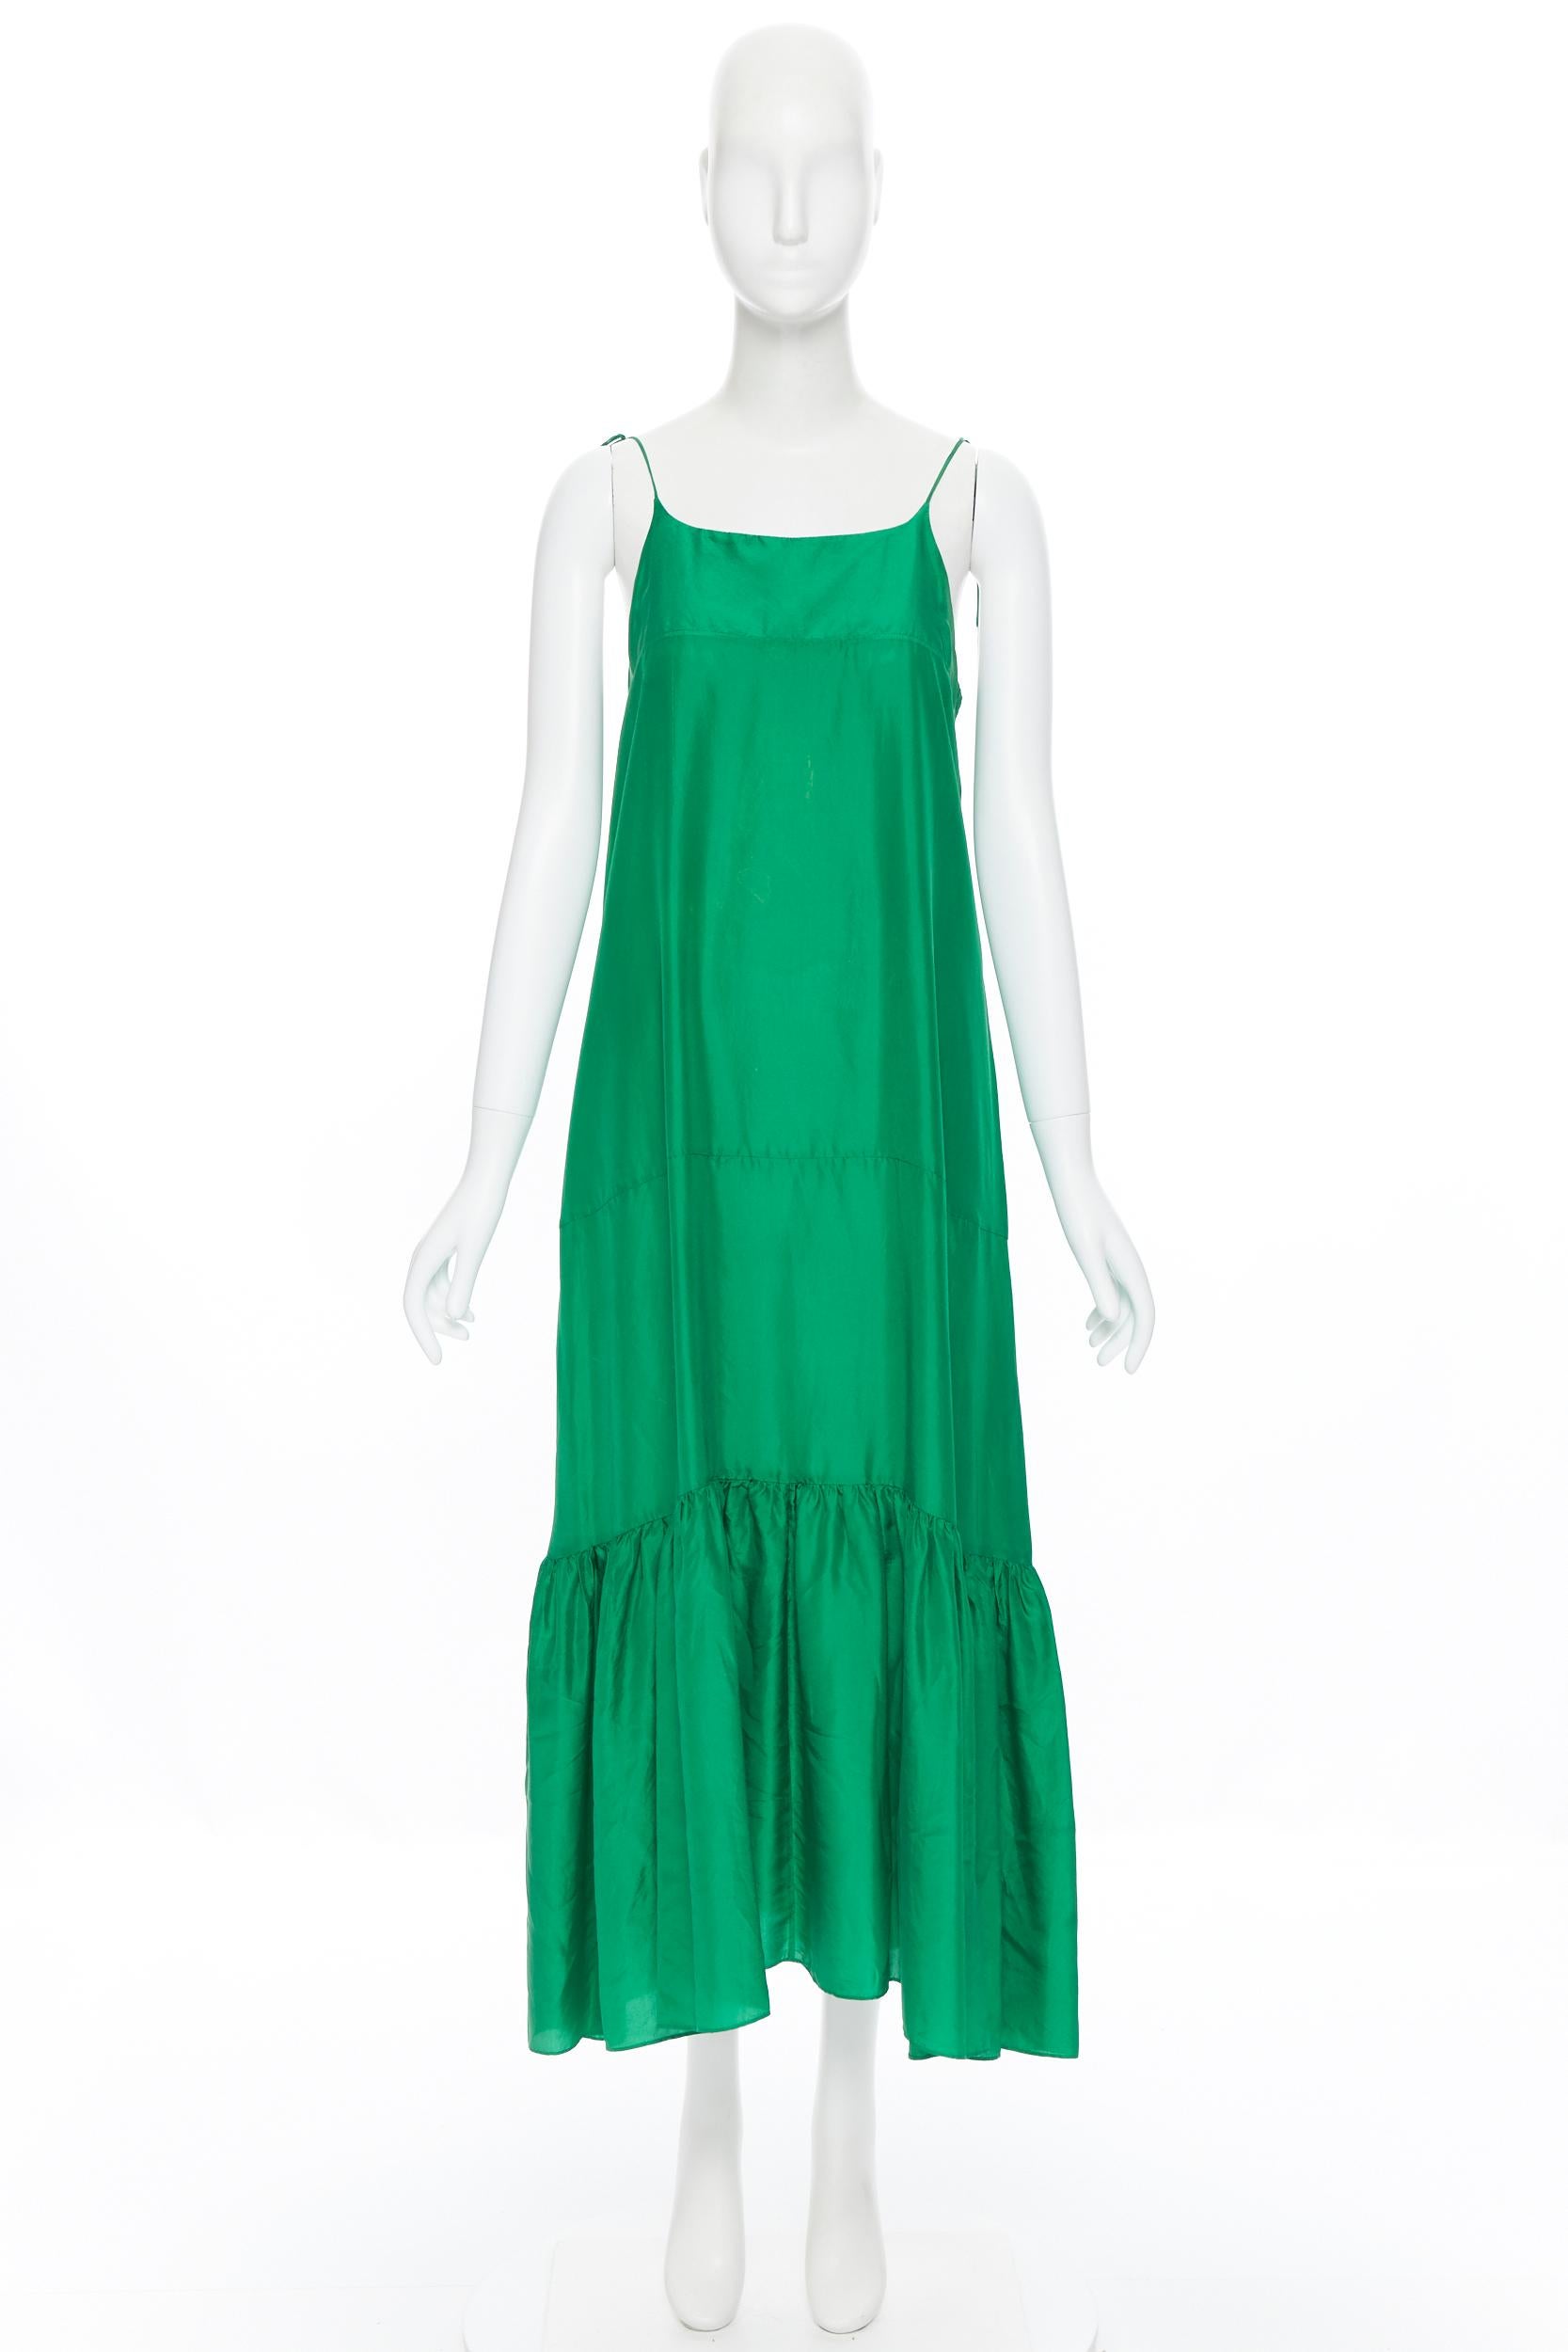 kalita green dress